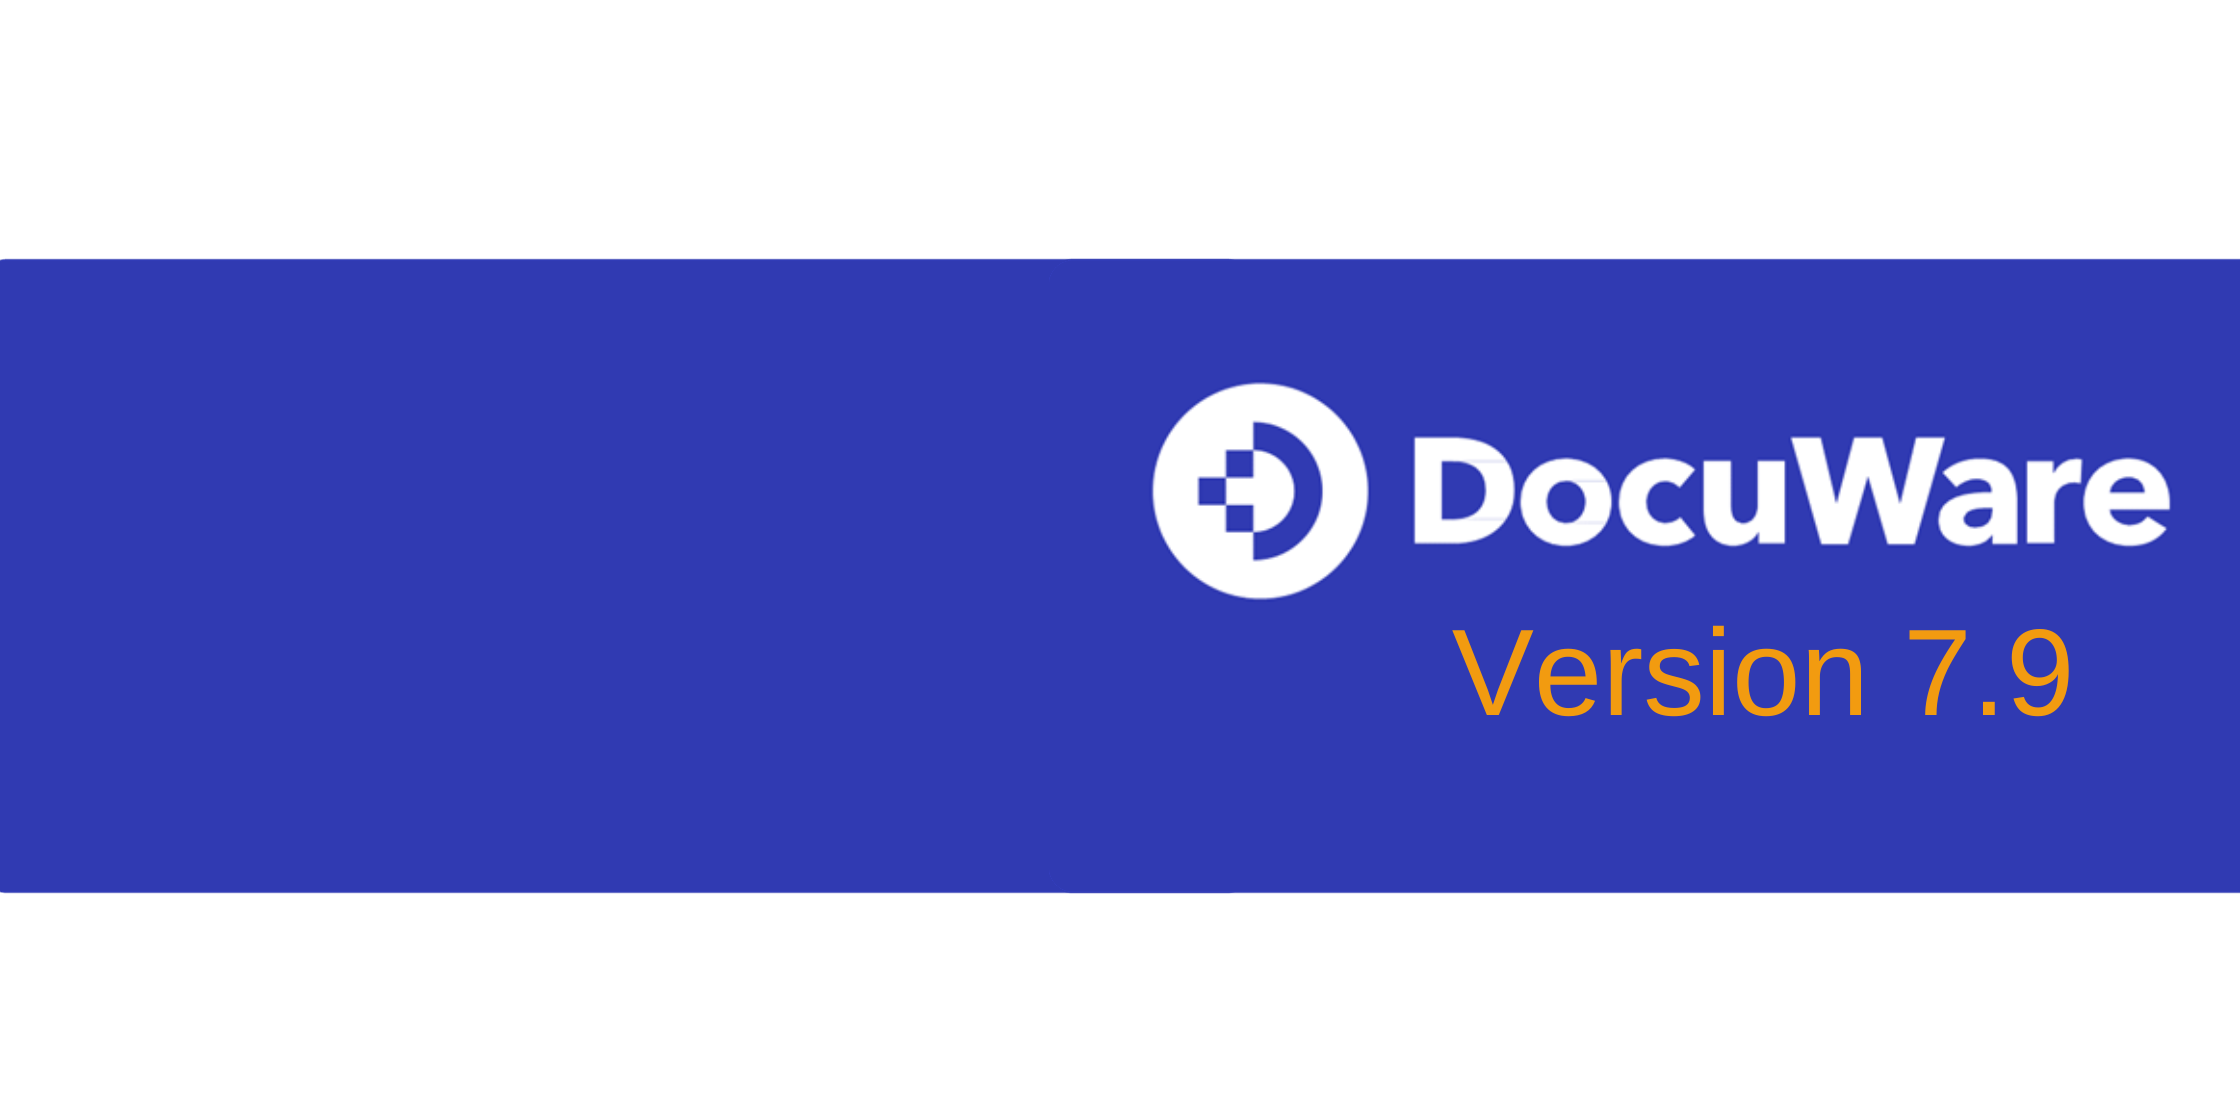 DocuWare 7.9 - DocuWare's Latest Release